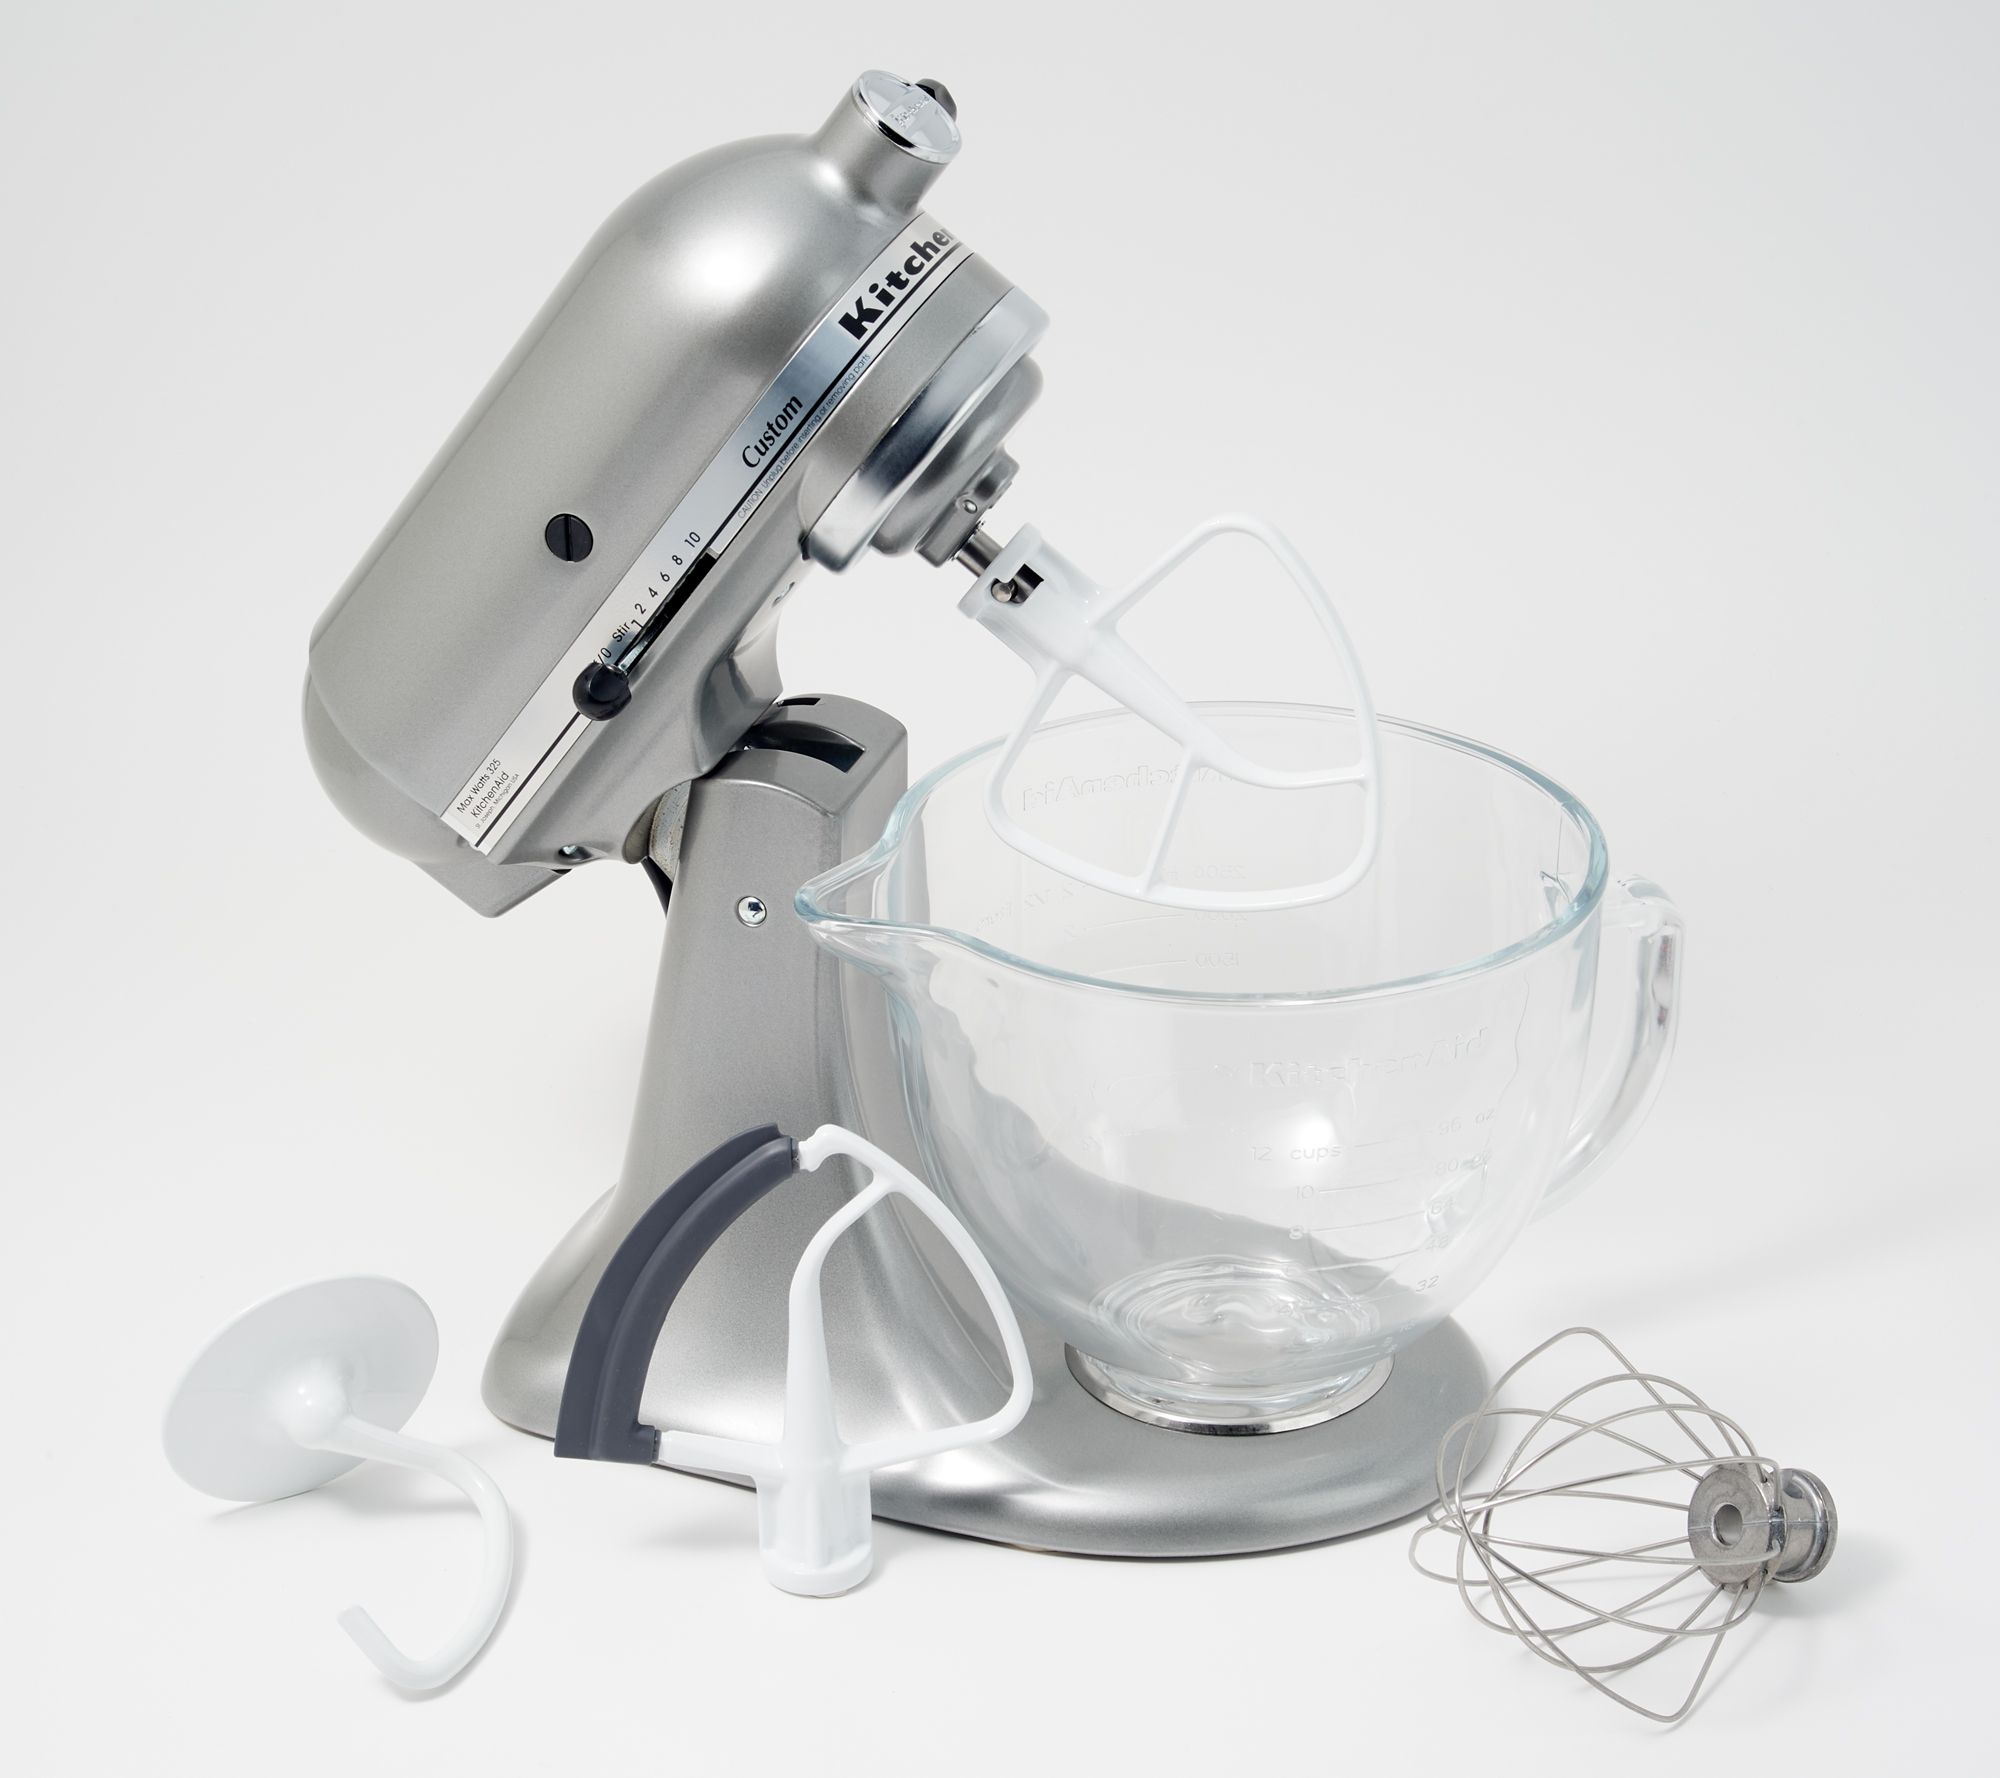 KitchenAid 5-Quart Artisan Tilt-Head Stand Mixer